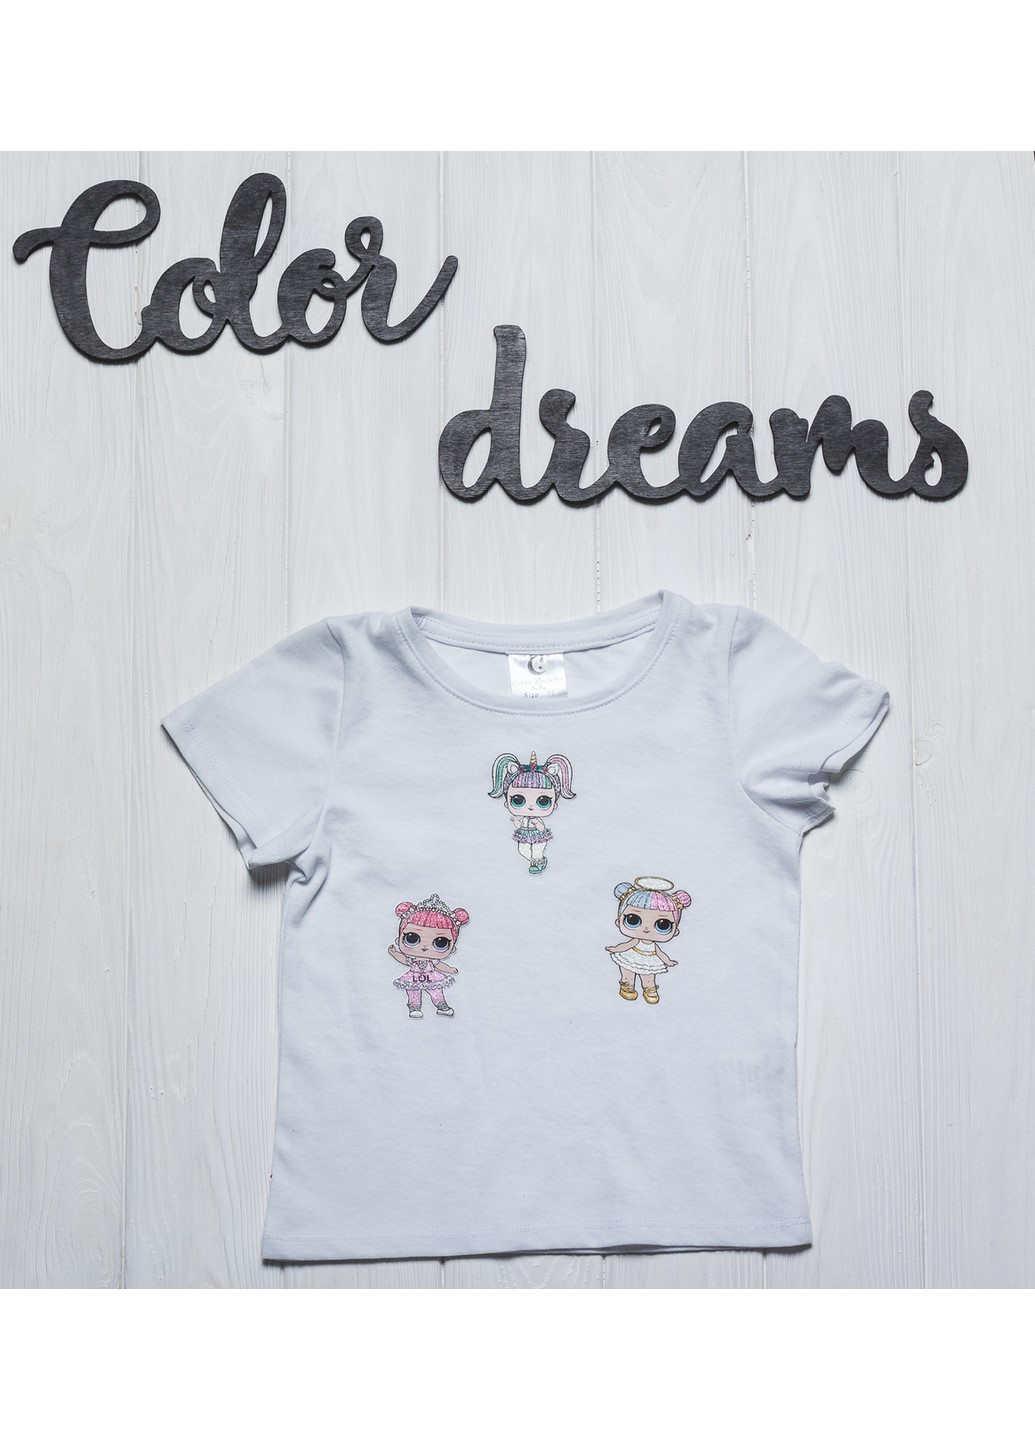 Біла демісезонна футболка 1045 98 біла Color Dreams